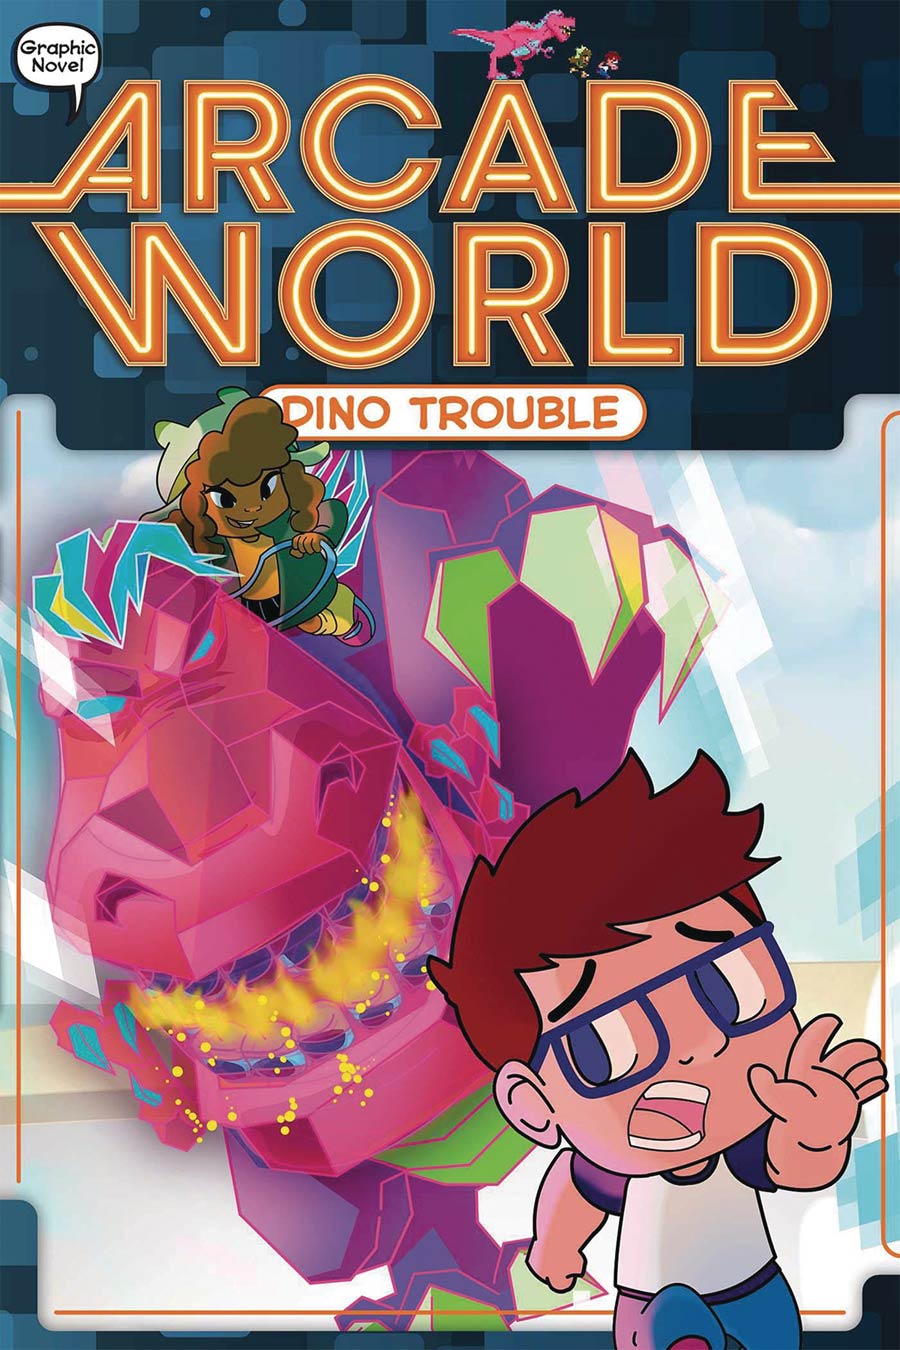 Arcade World Vol 1 Dino Trouble TP